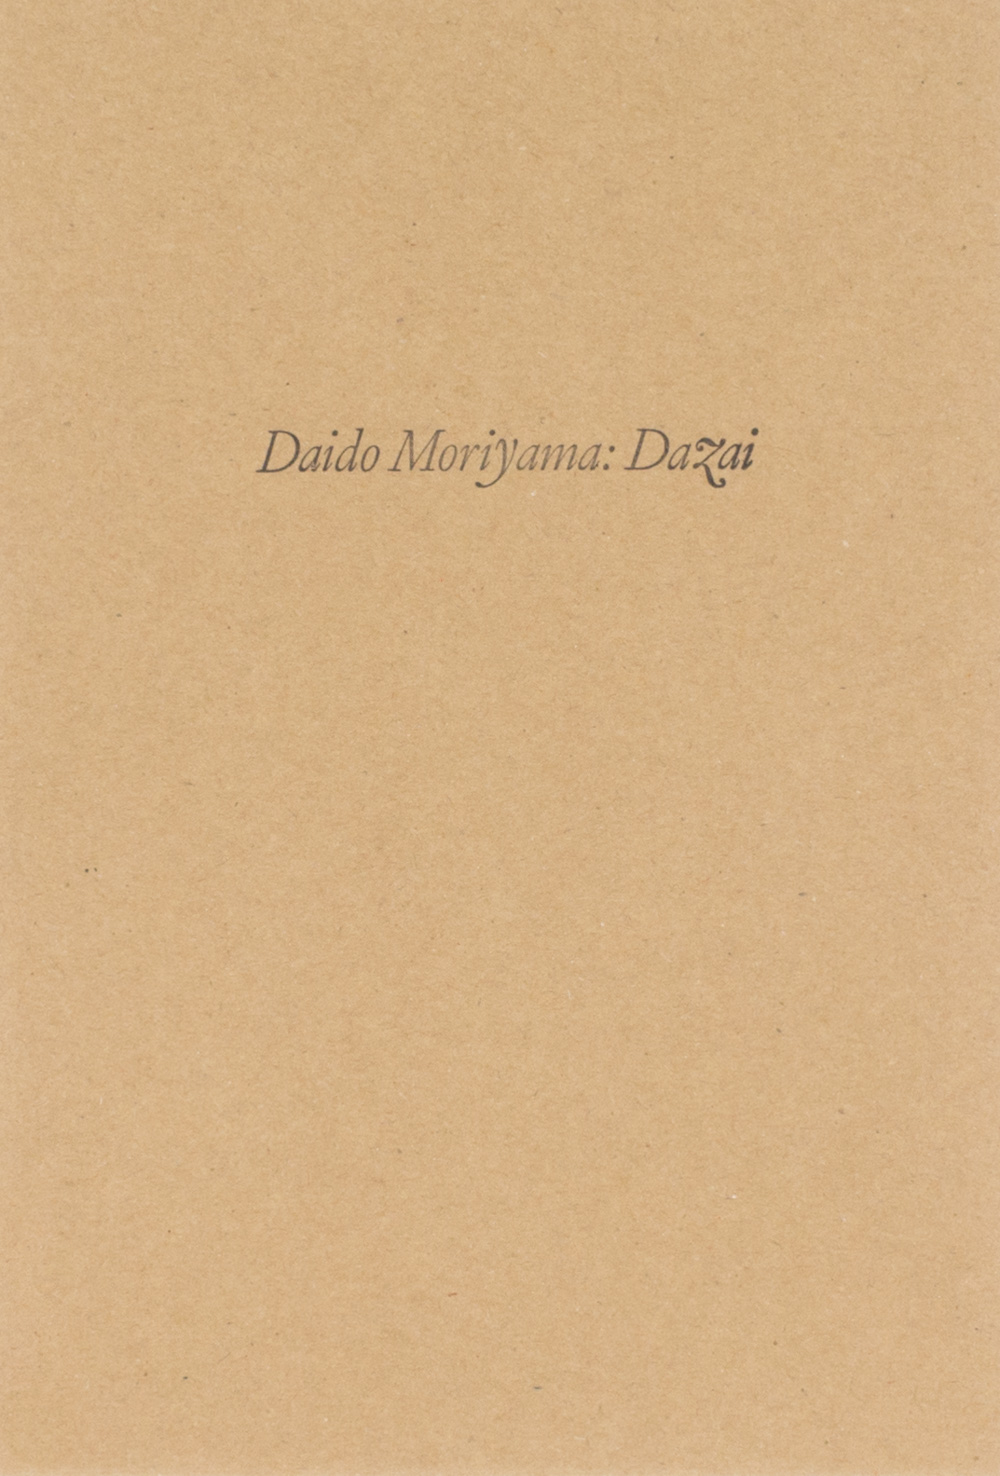 Dazai (MMM no.5)